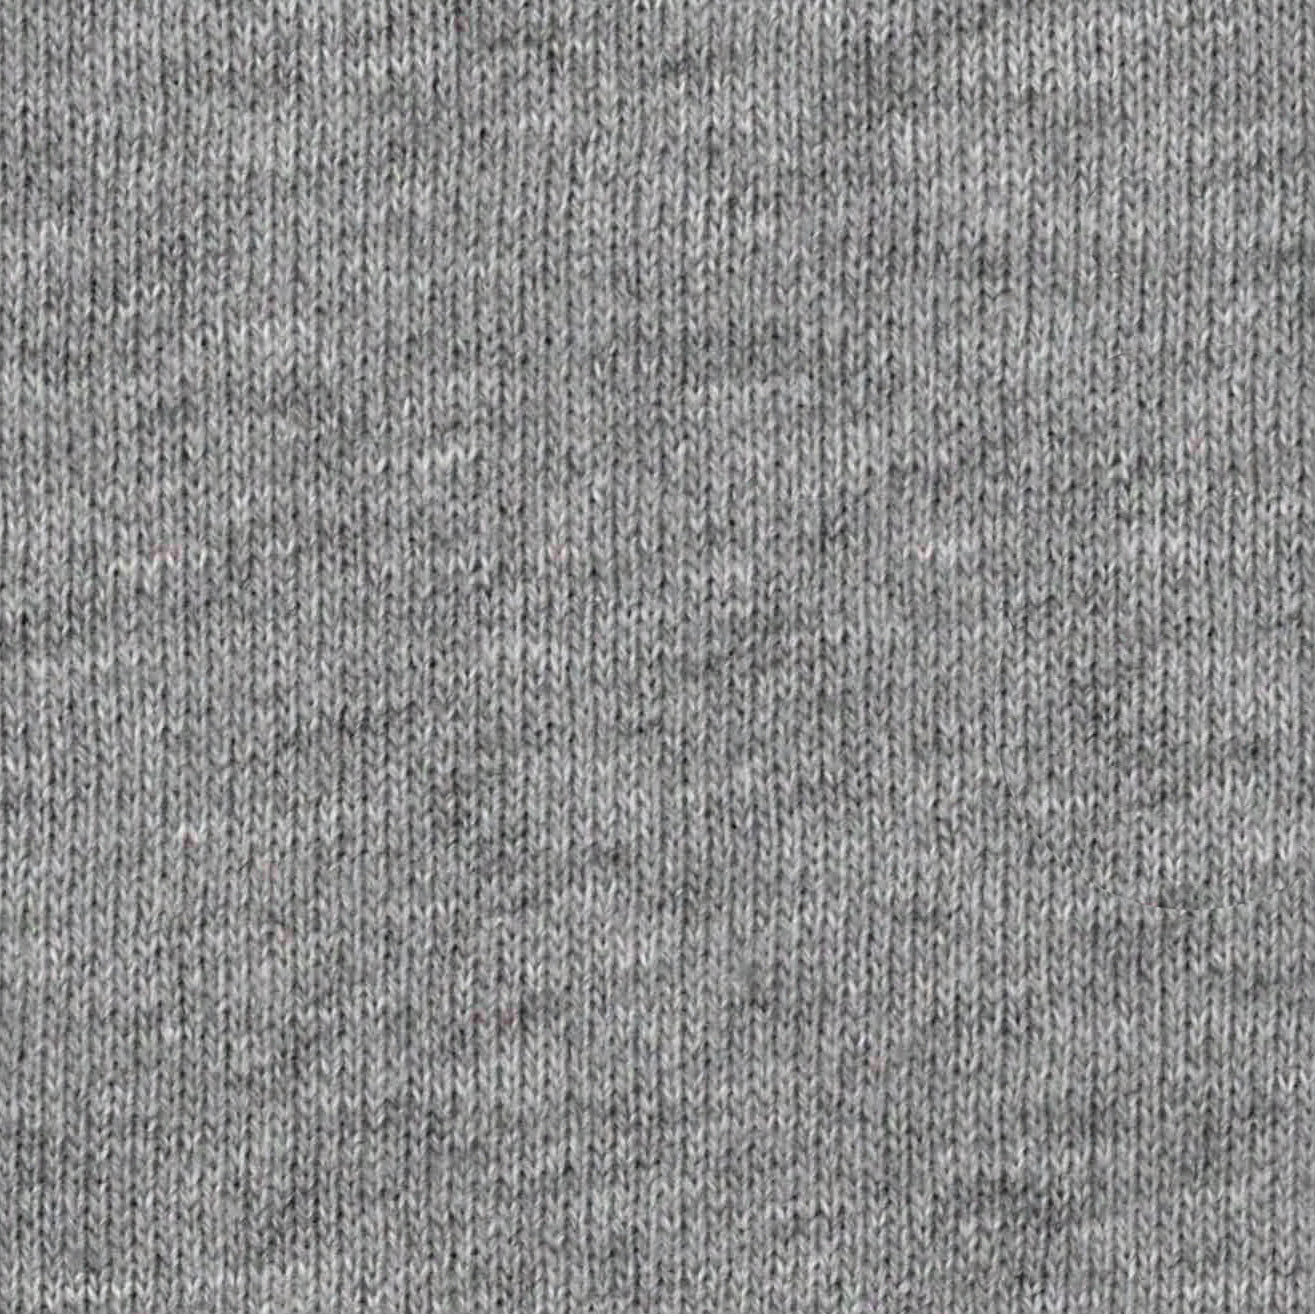 Graphite Organic Cotton Fleece Fabric - 300 GSM - Grown in the USA